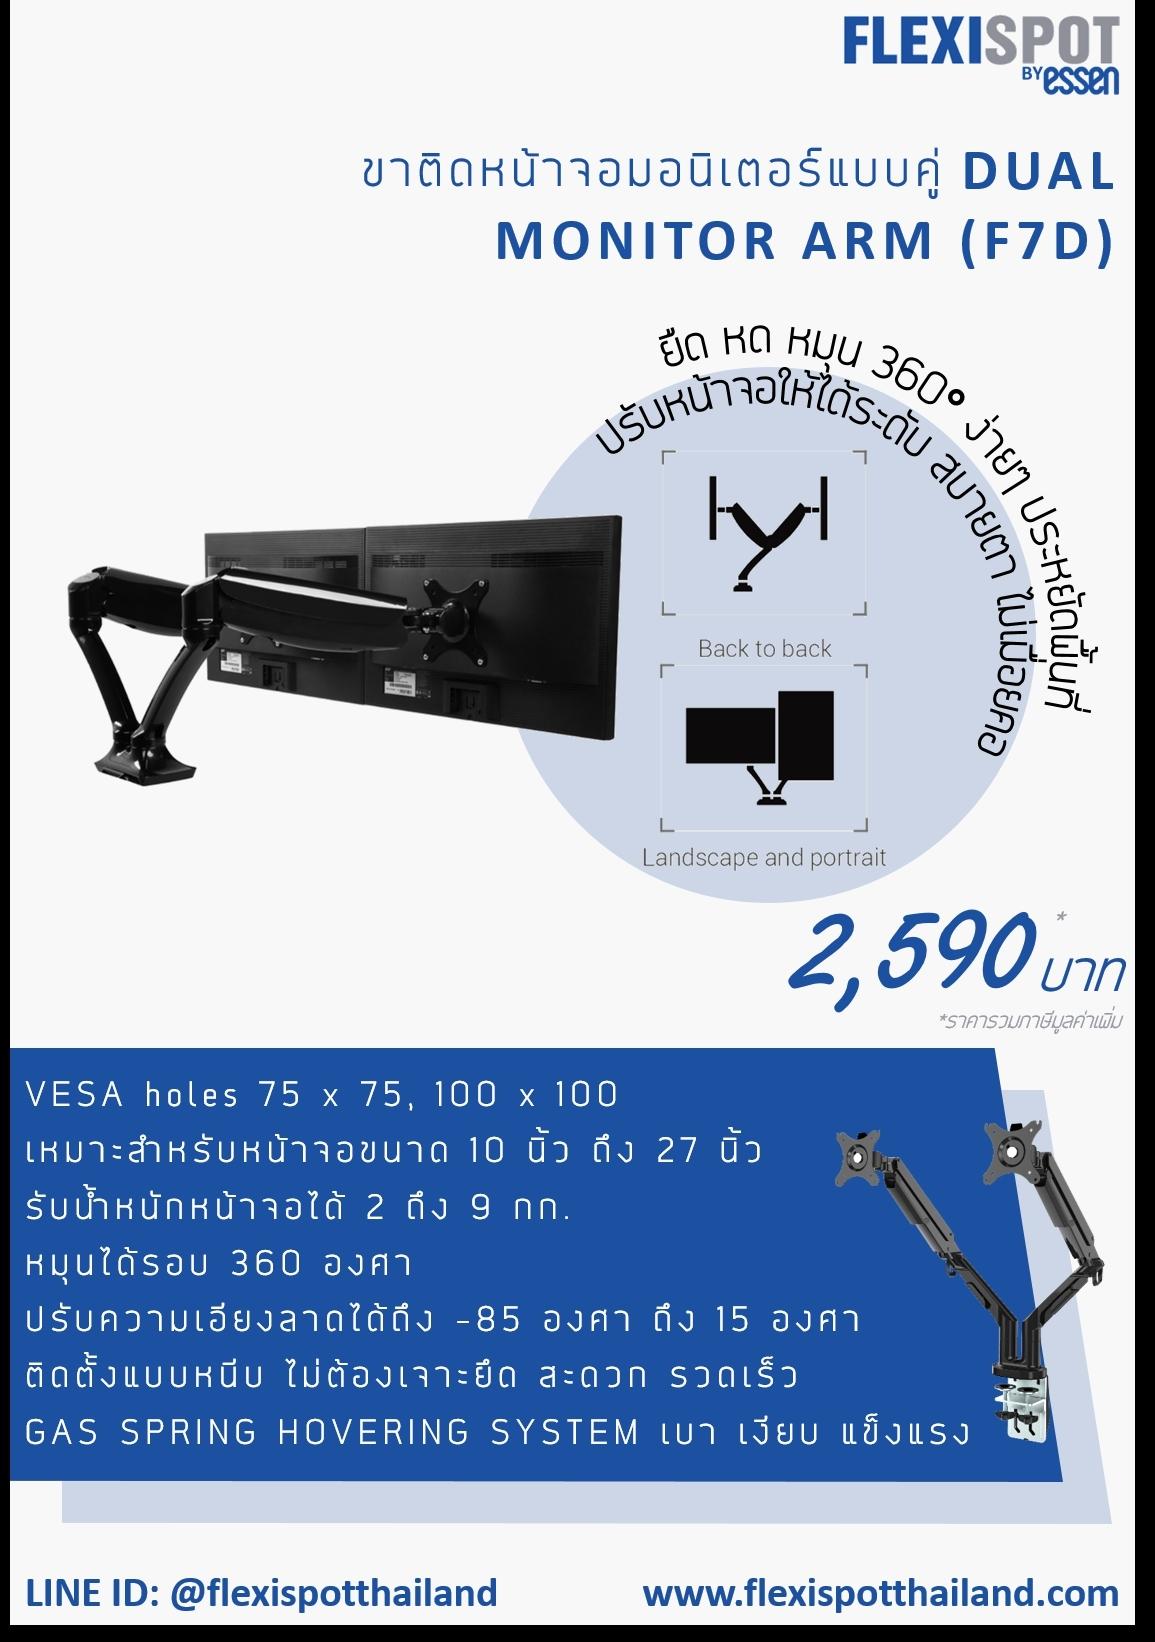 FlexiSpot Dual Monitor Arm F7D - Black // ขาติดหน้าจอ แขนจับจอ มอนิเตอร์แบบคู่ - สีดำ